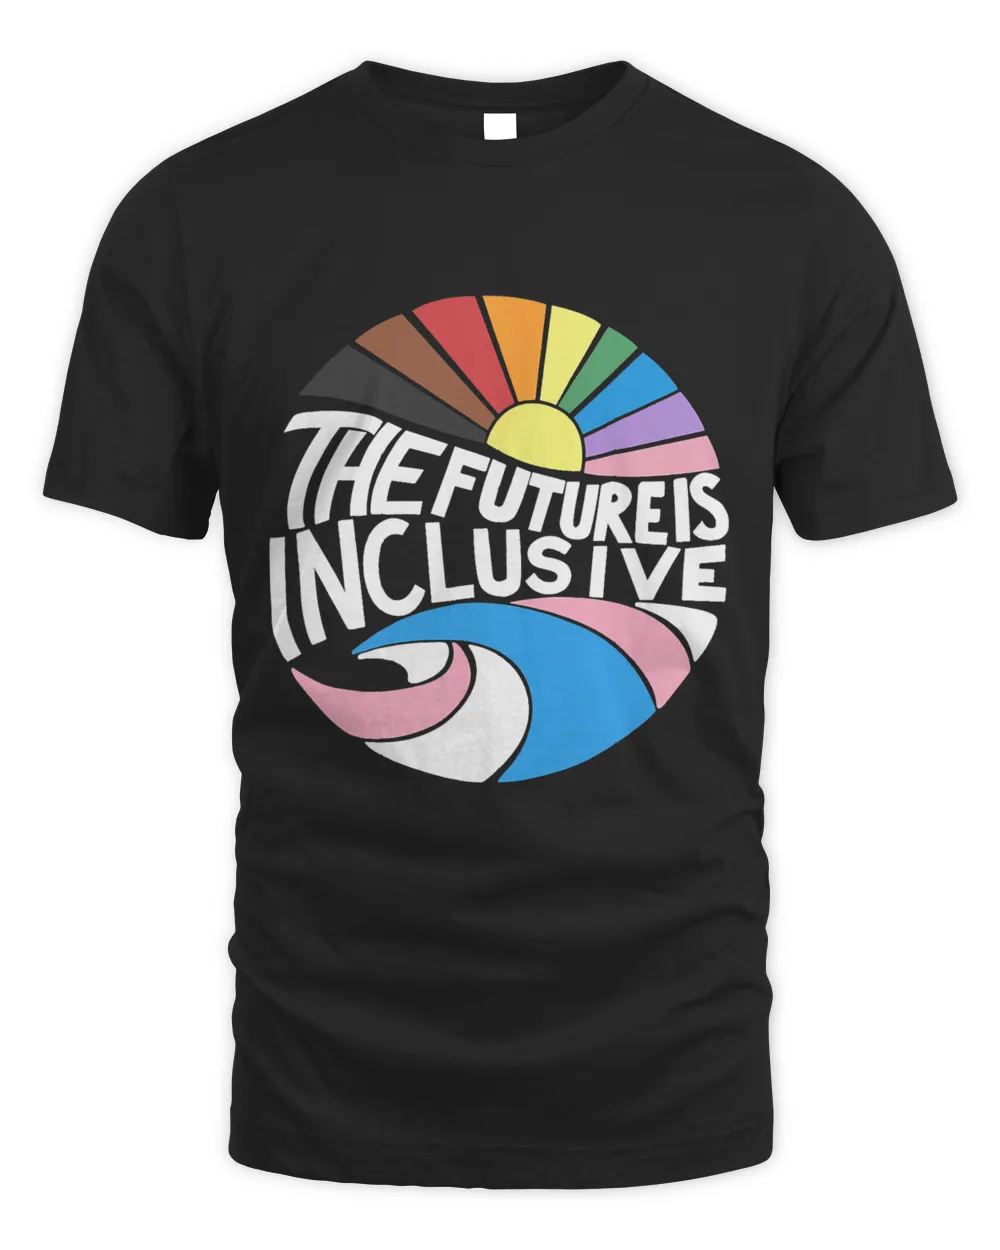 Retro Vintage The Future Is Inclusive LGBT Gay Rights Pride